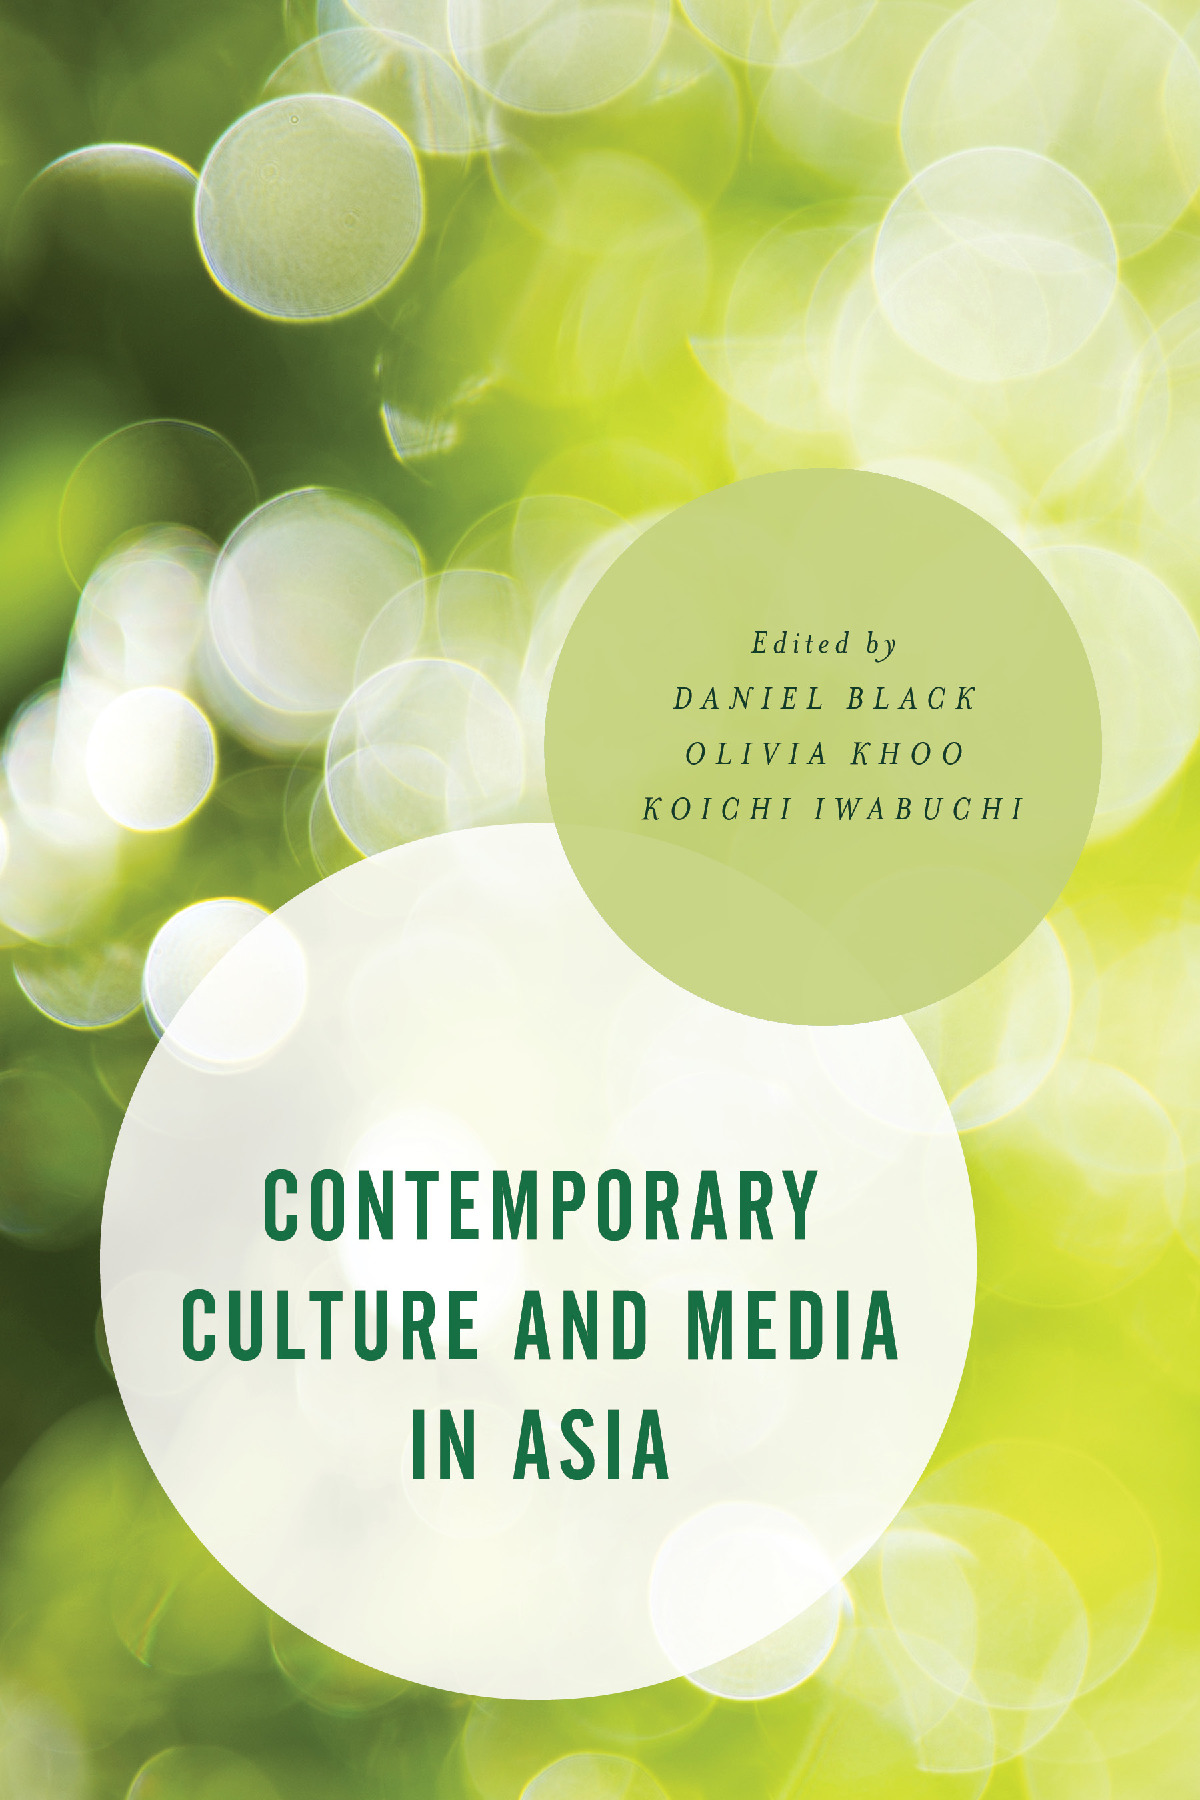 Contemporary culture and media in Asia